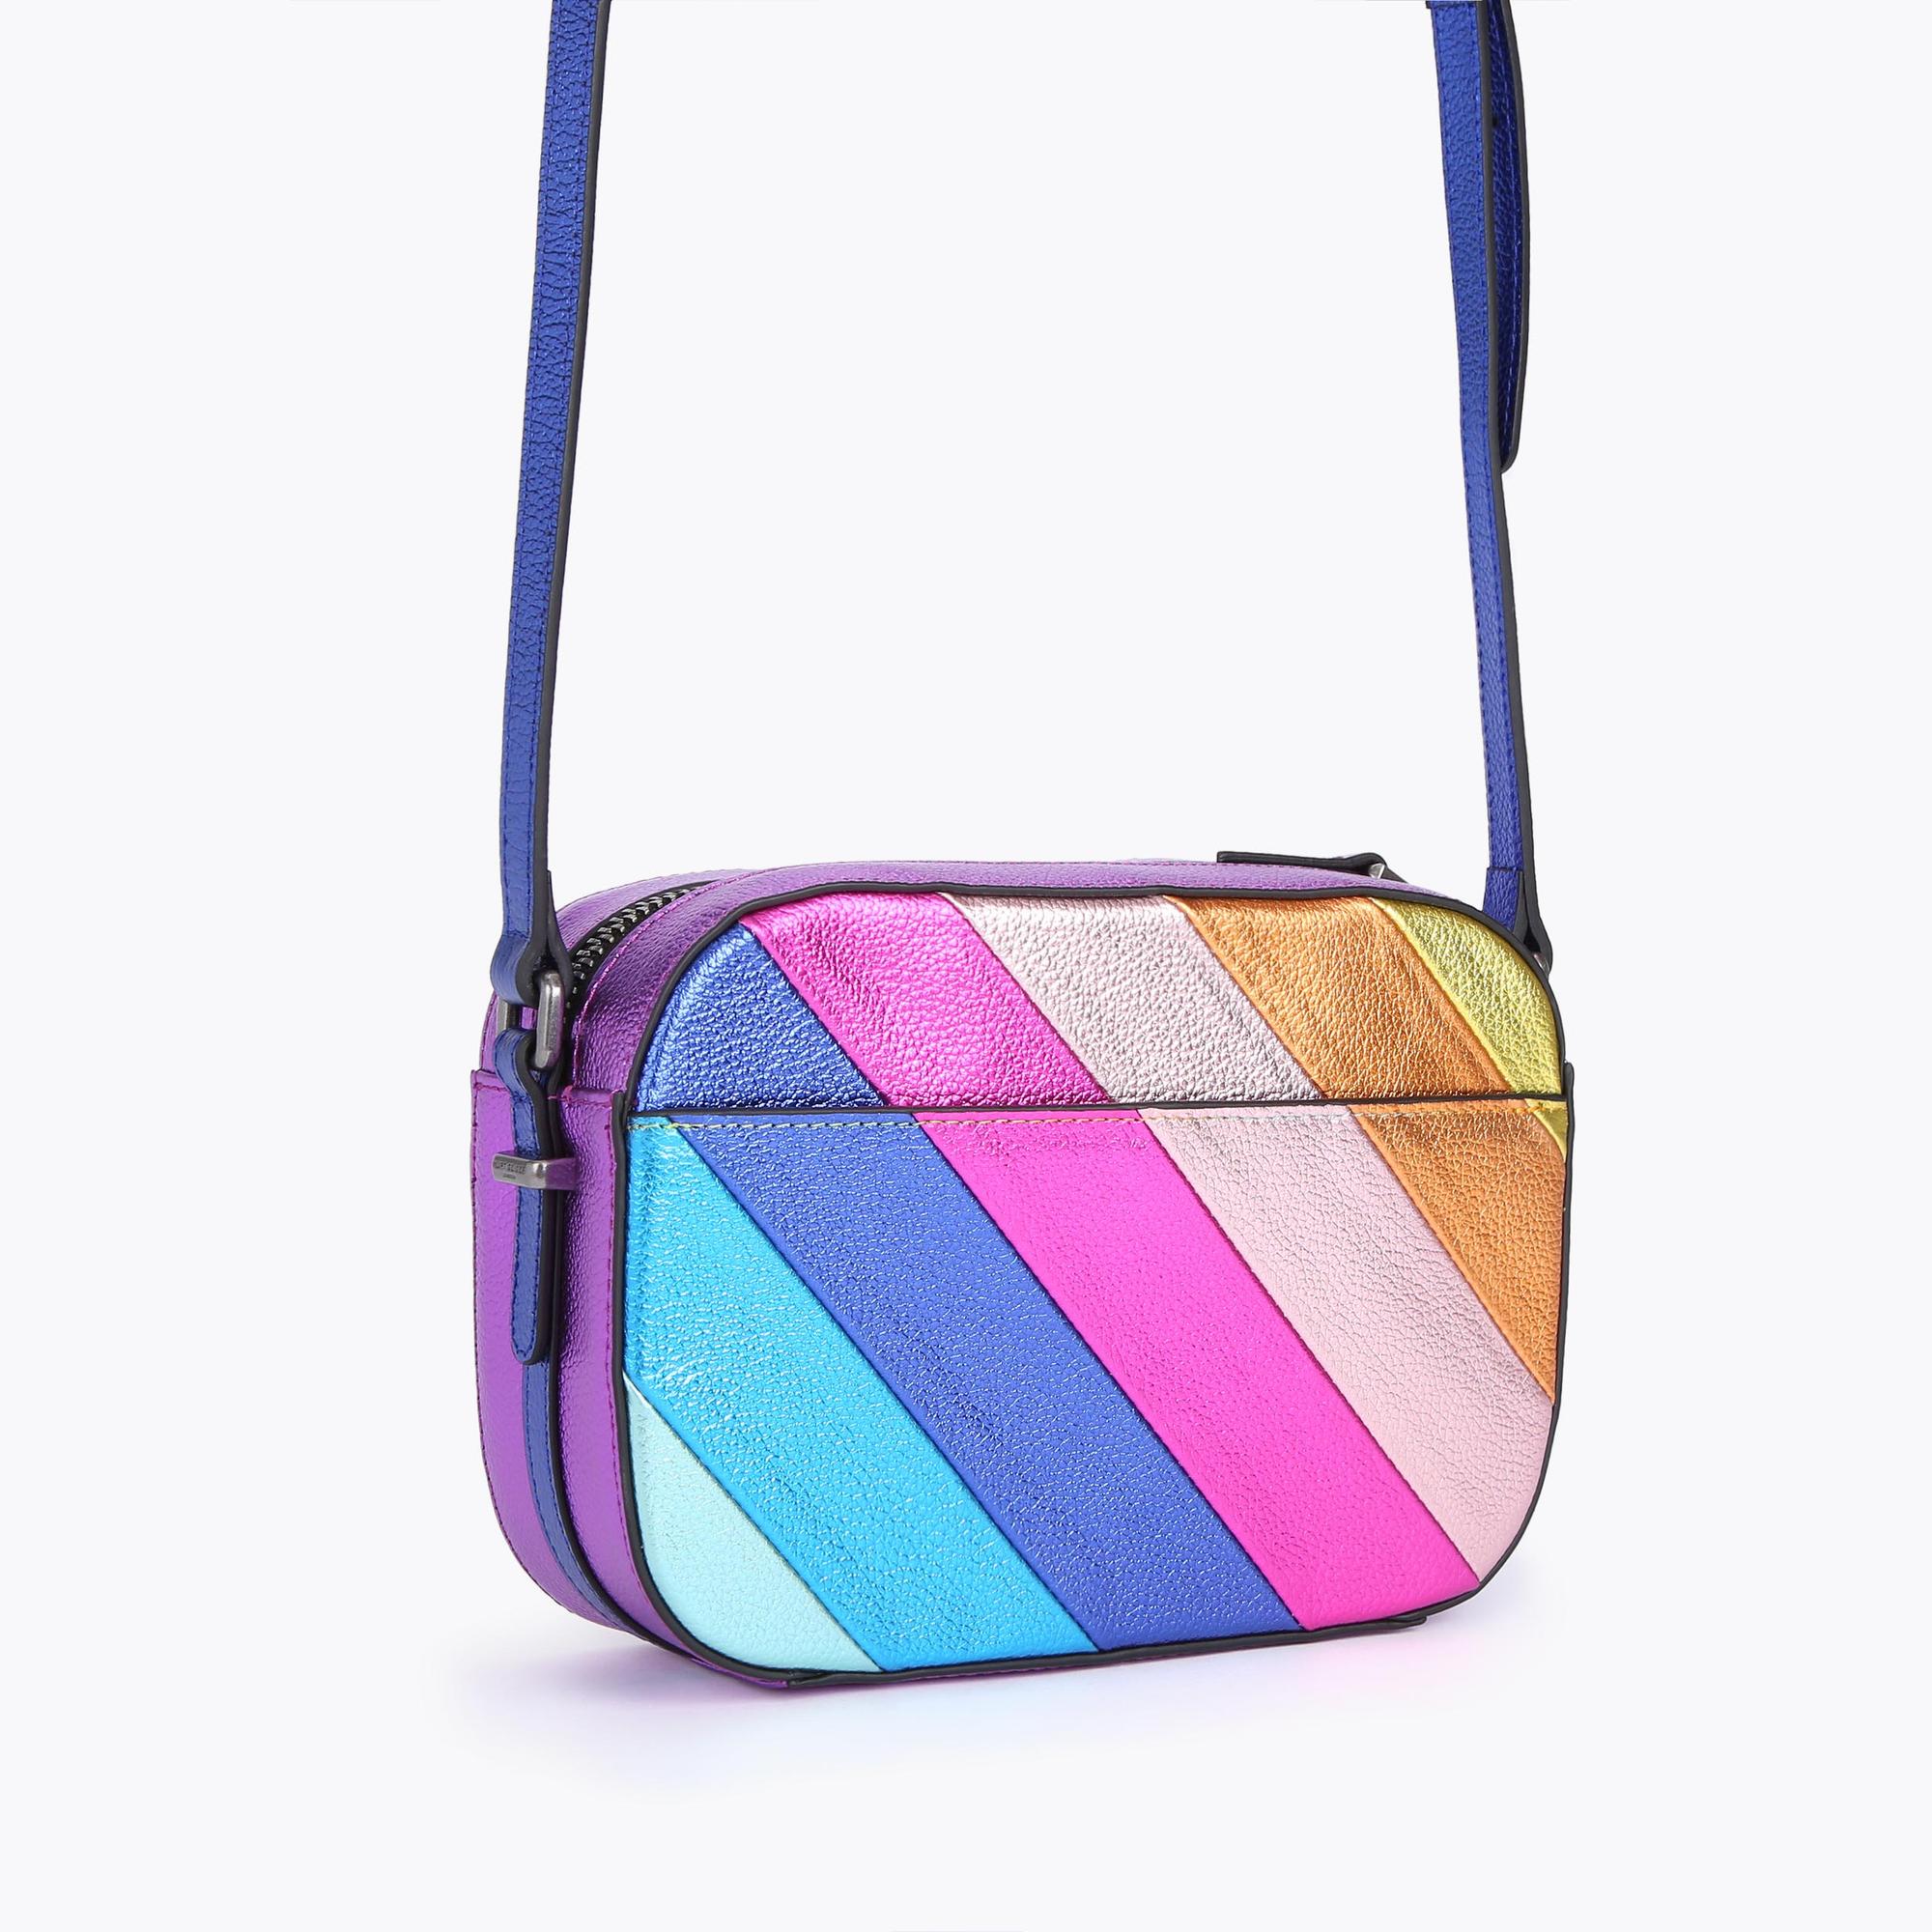 Kurt Geiger London Kensington Metallic Rainbow Striped Leather Crossbody Bag